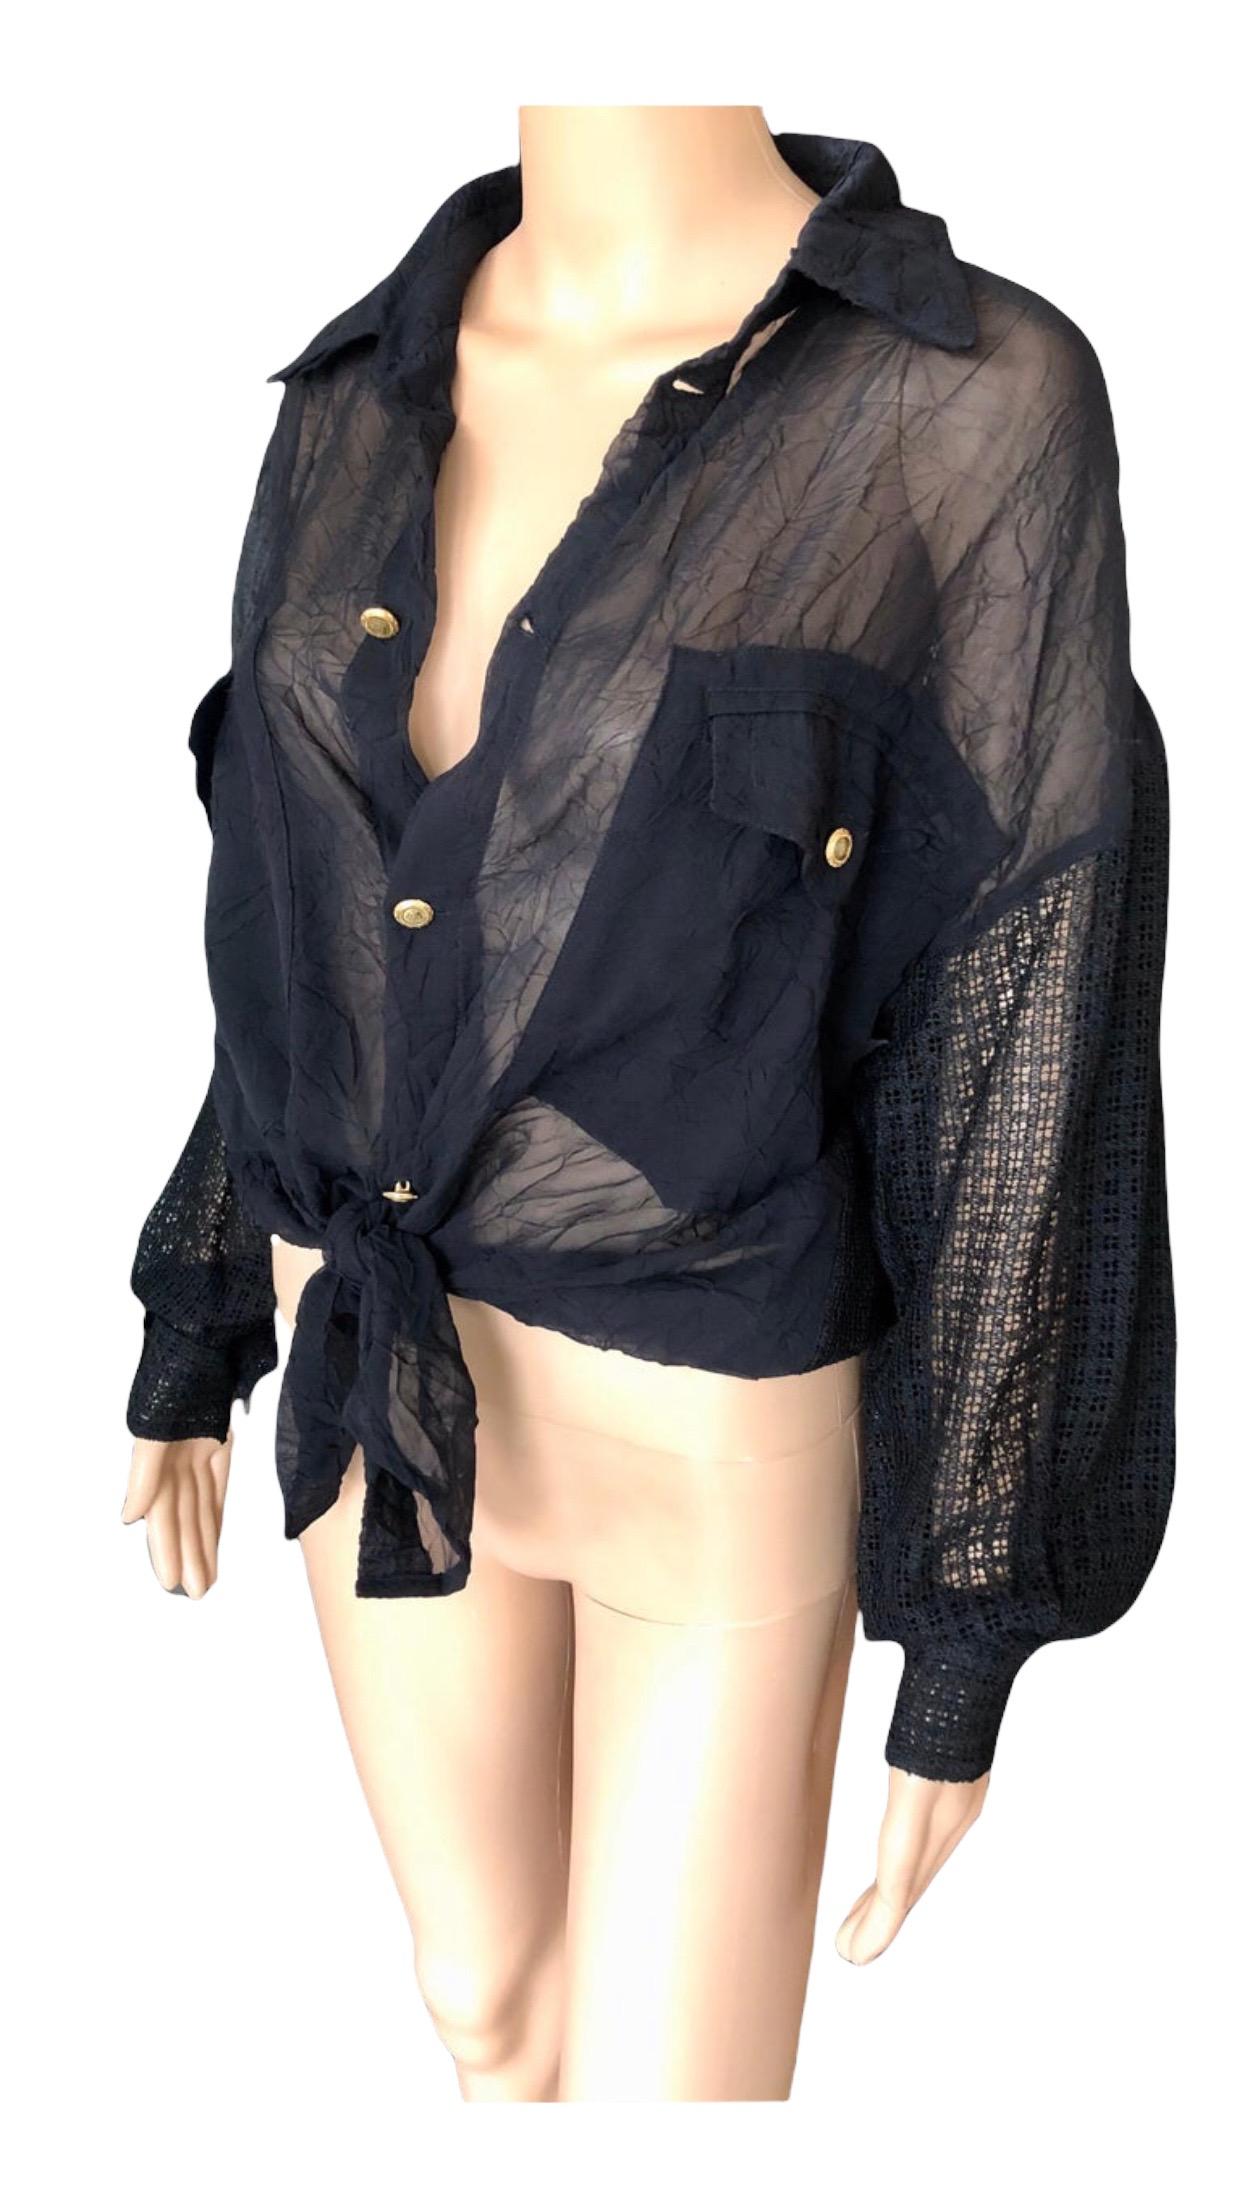 Gianni Versace c. 1990 Vintage Sheer Silk Mesh Black Shirt Blouse Top For Sale 4